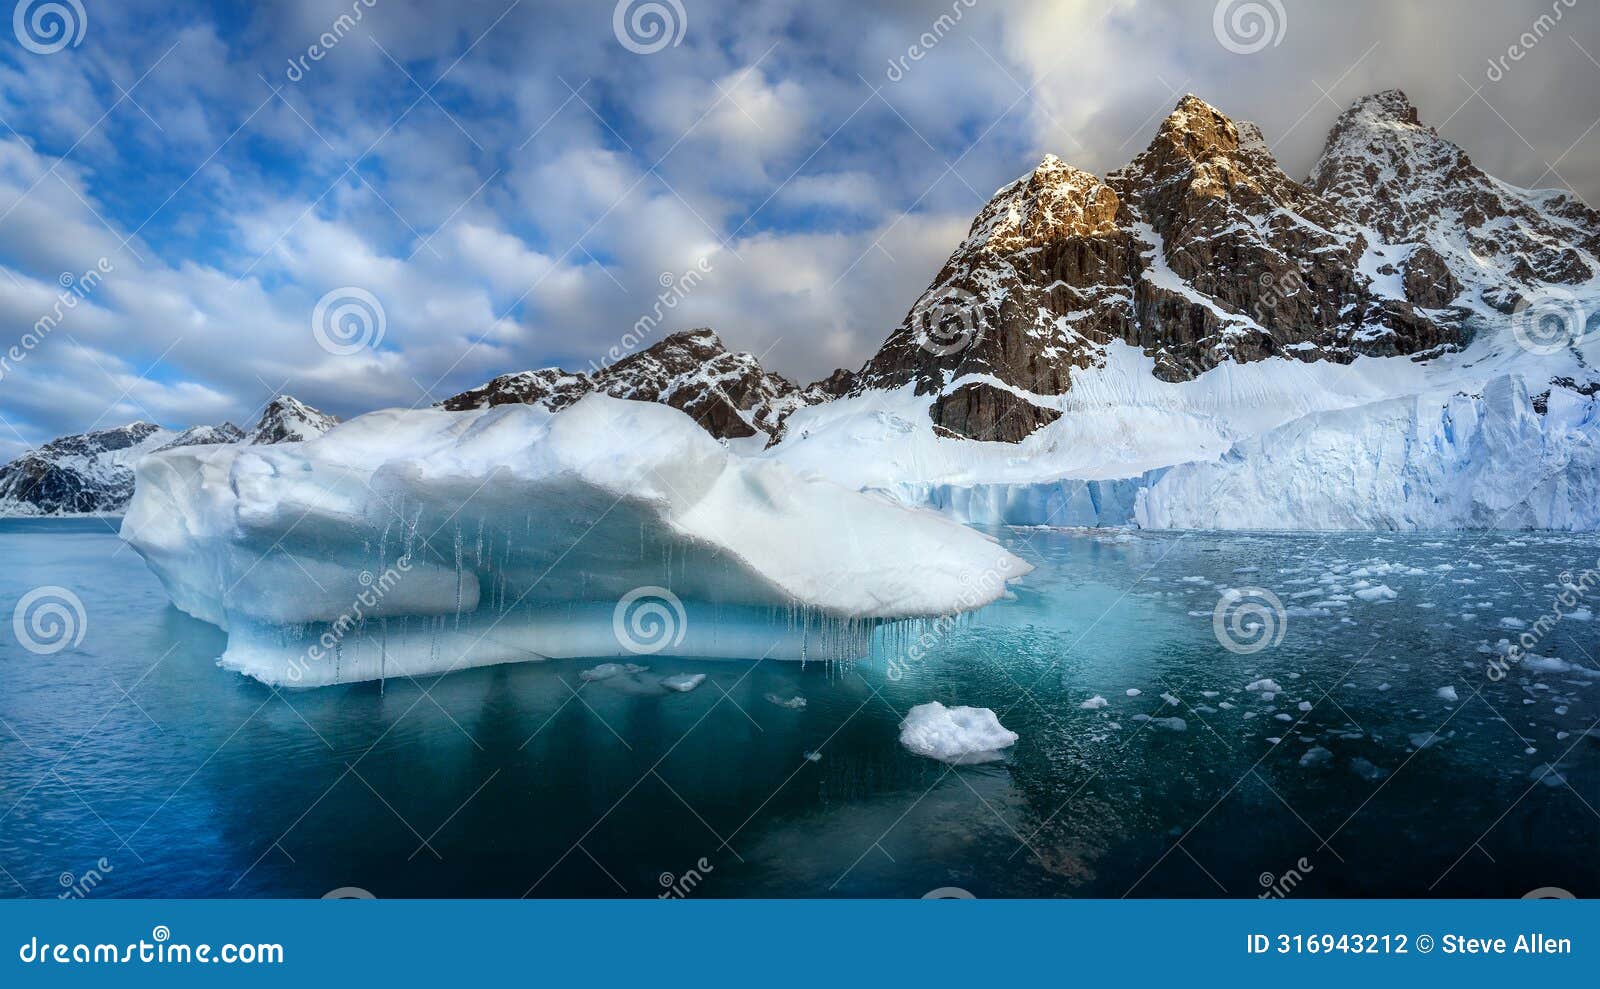 petzval glacier - antarctic peninsula - antarctica